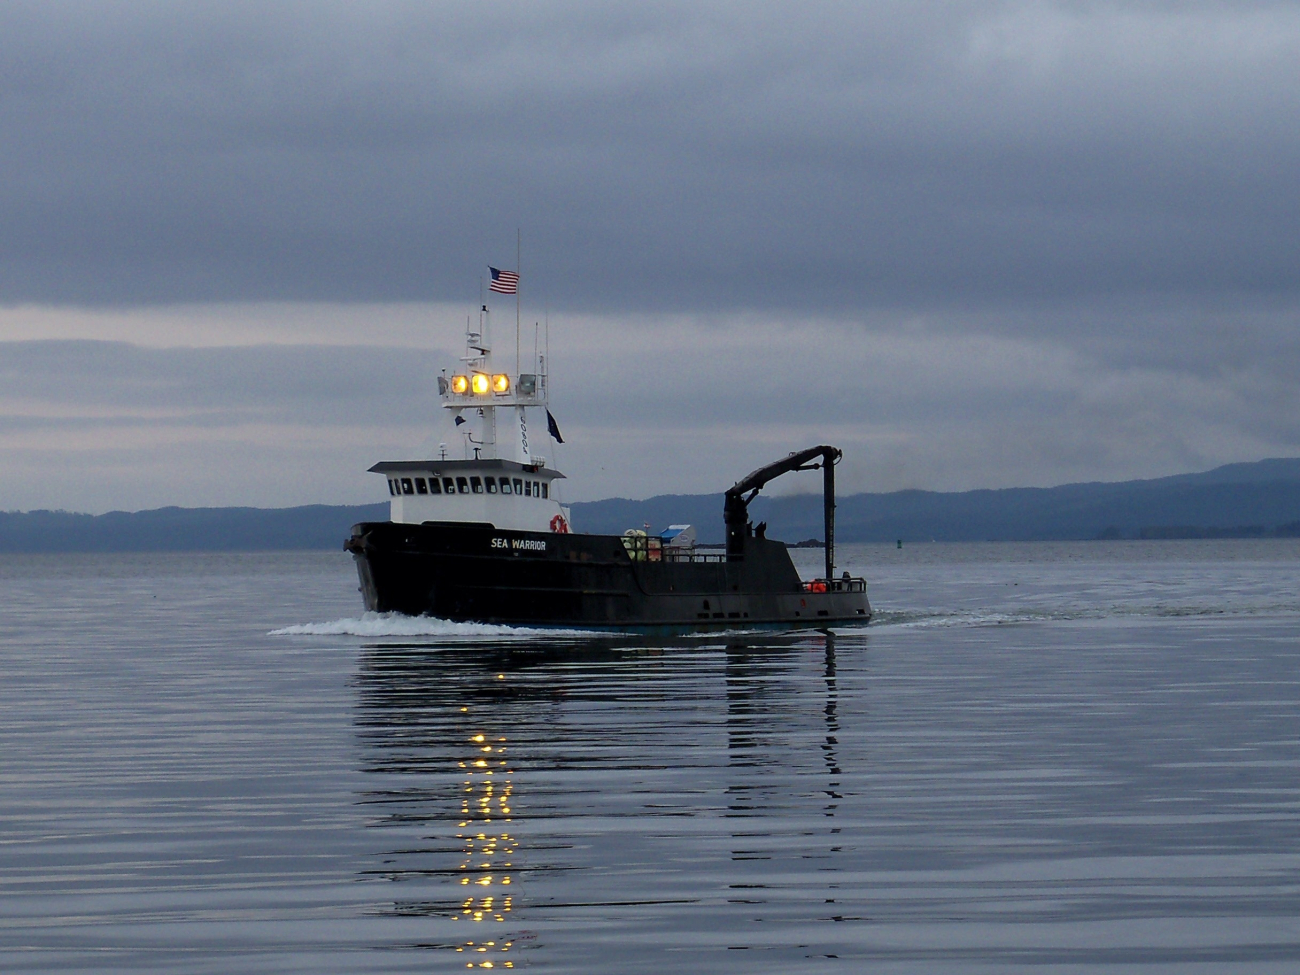 Alaska fishing vessel SEA WARRIOR departing Kodiak